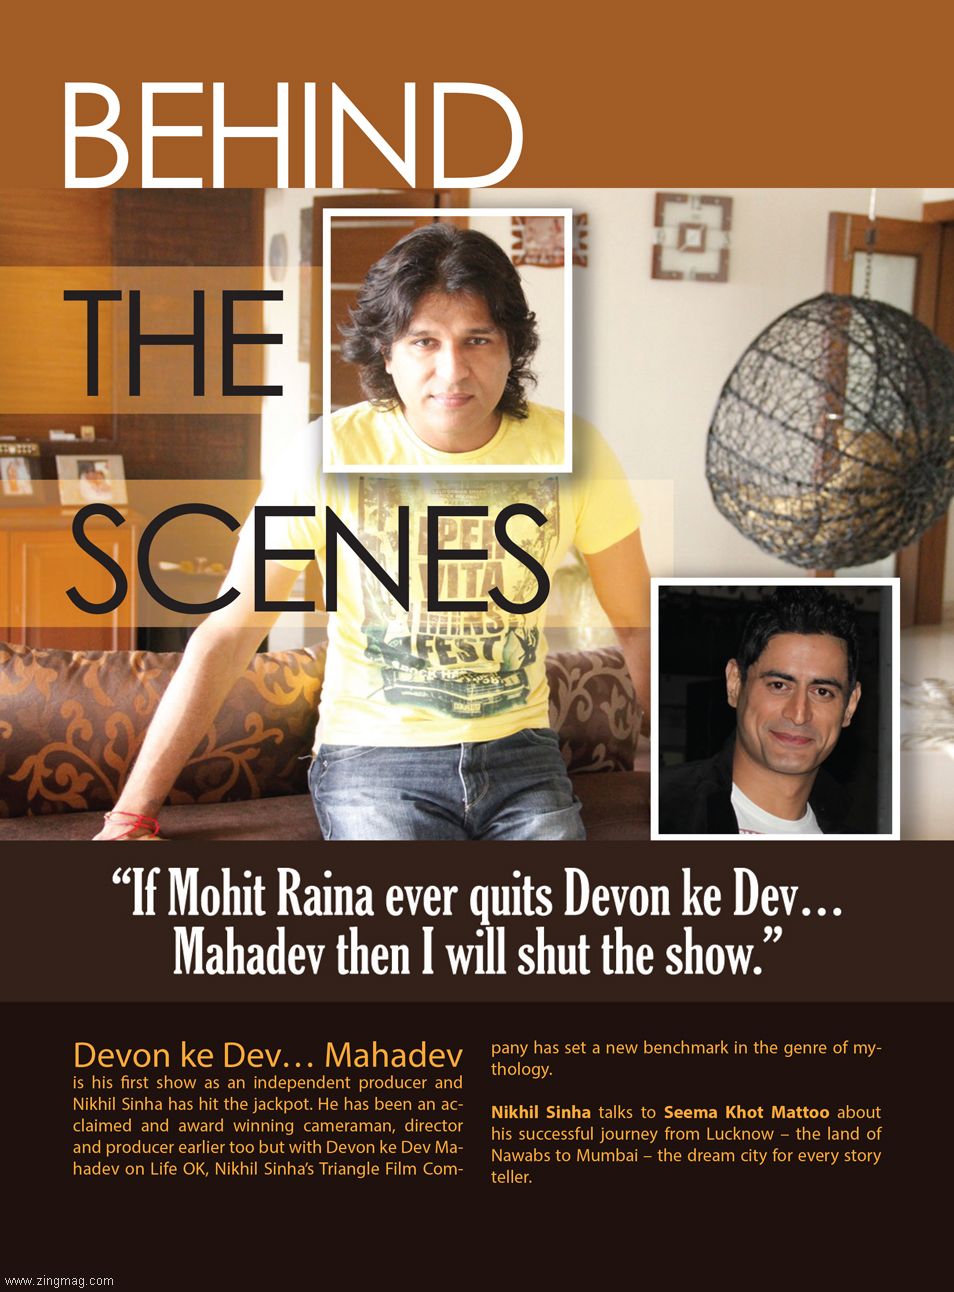 If Mohit Will Quit DKDM Then I will close show- Nikhil Sinha | Devon ke ...